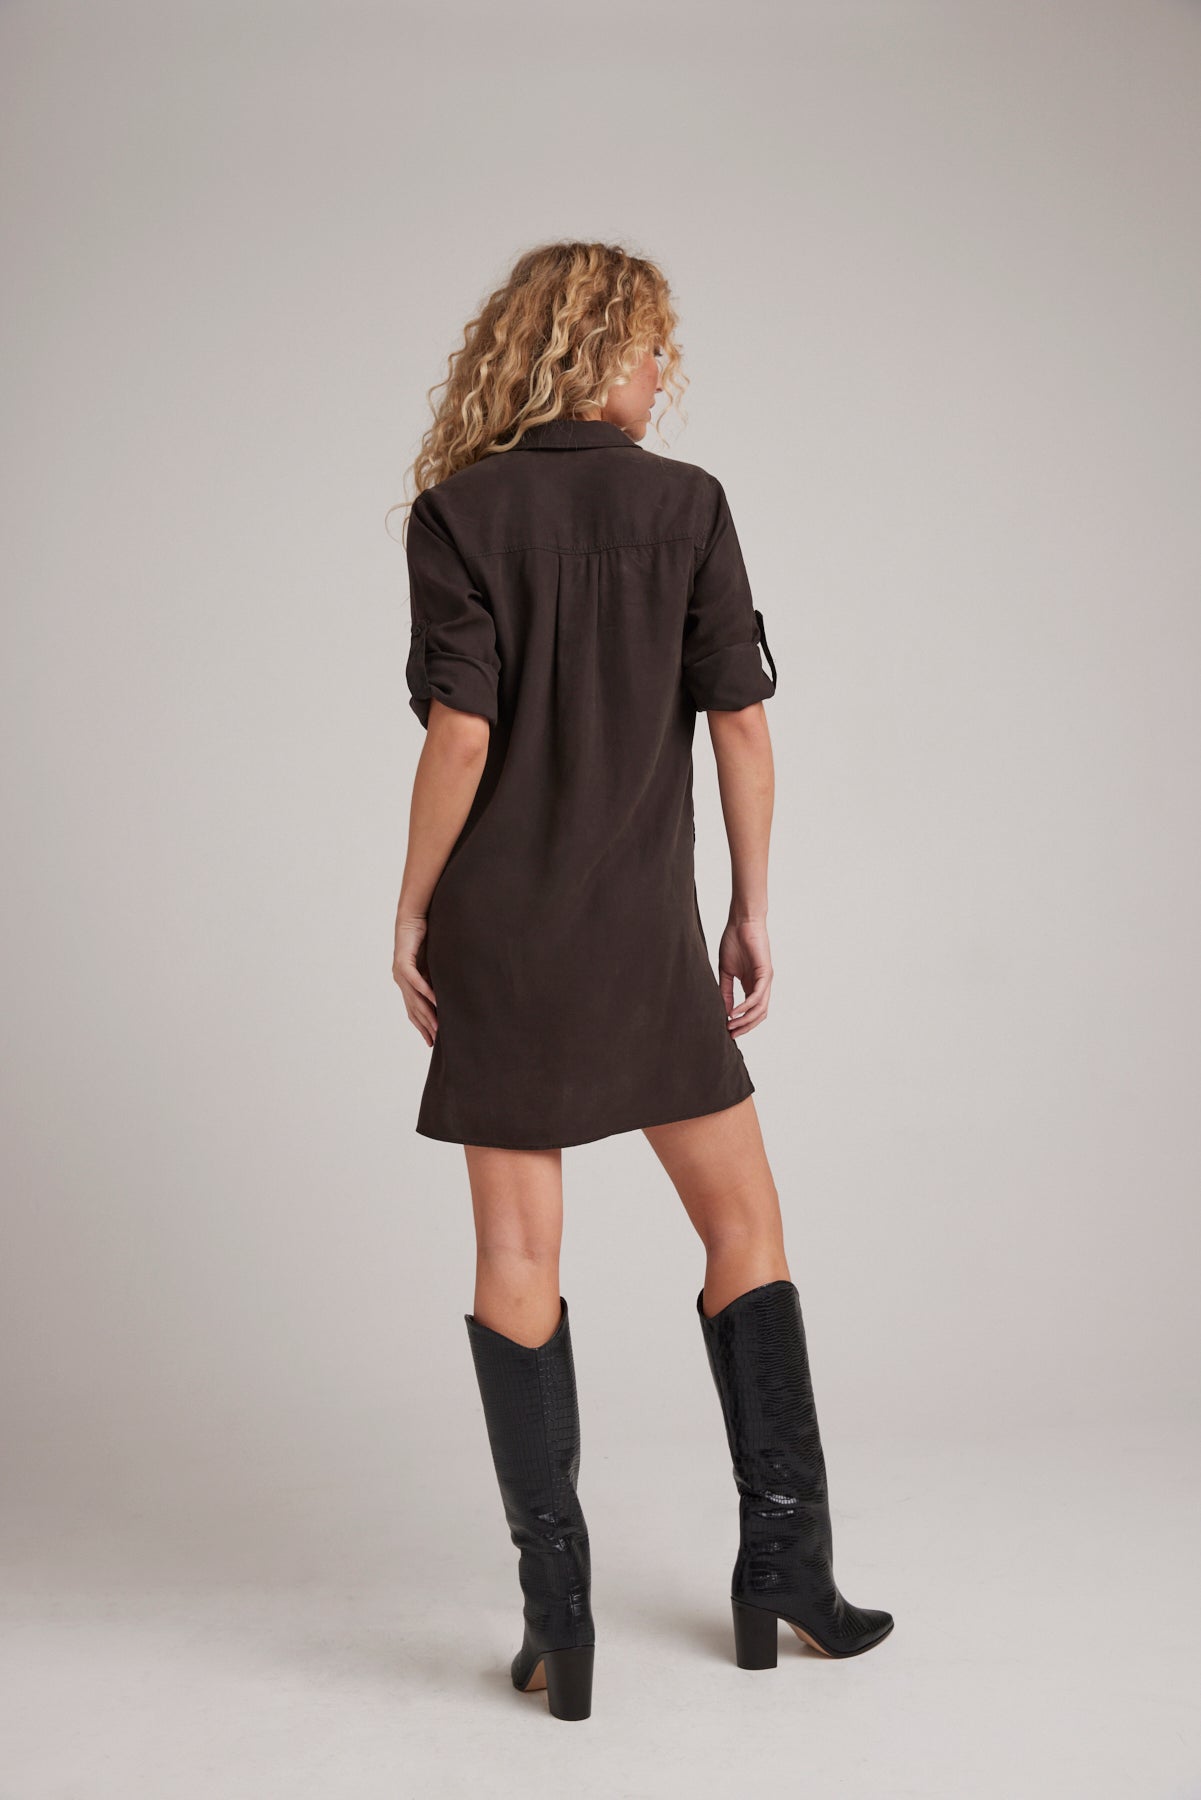 Bella DahlLong Sleeve A-Line Dress - Quartz BrownDresses